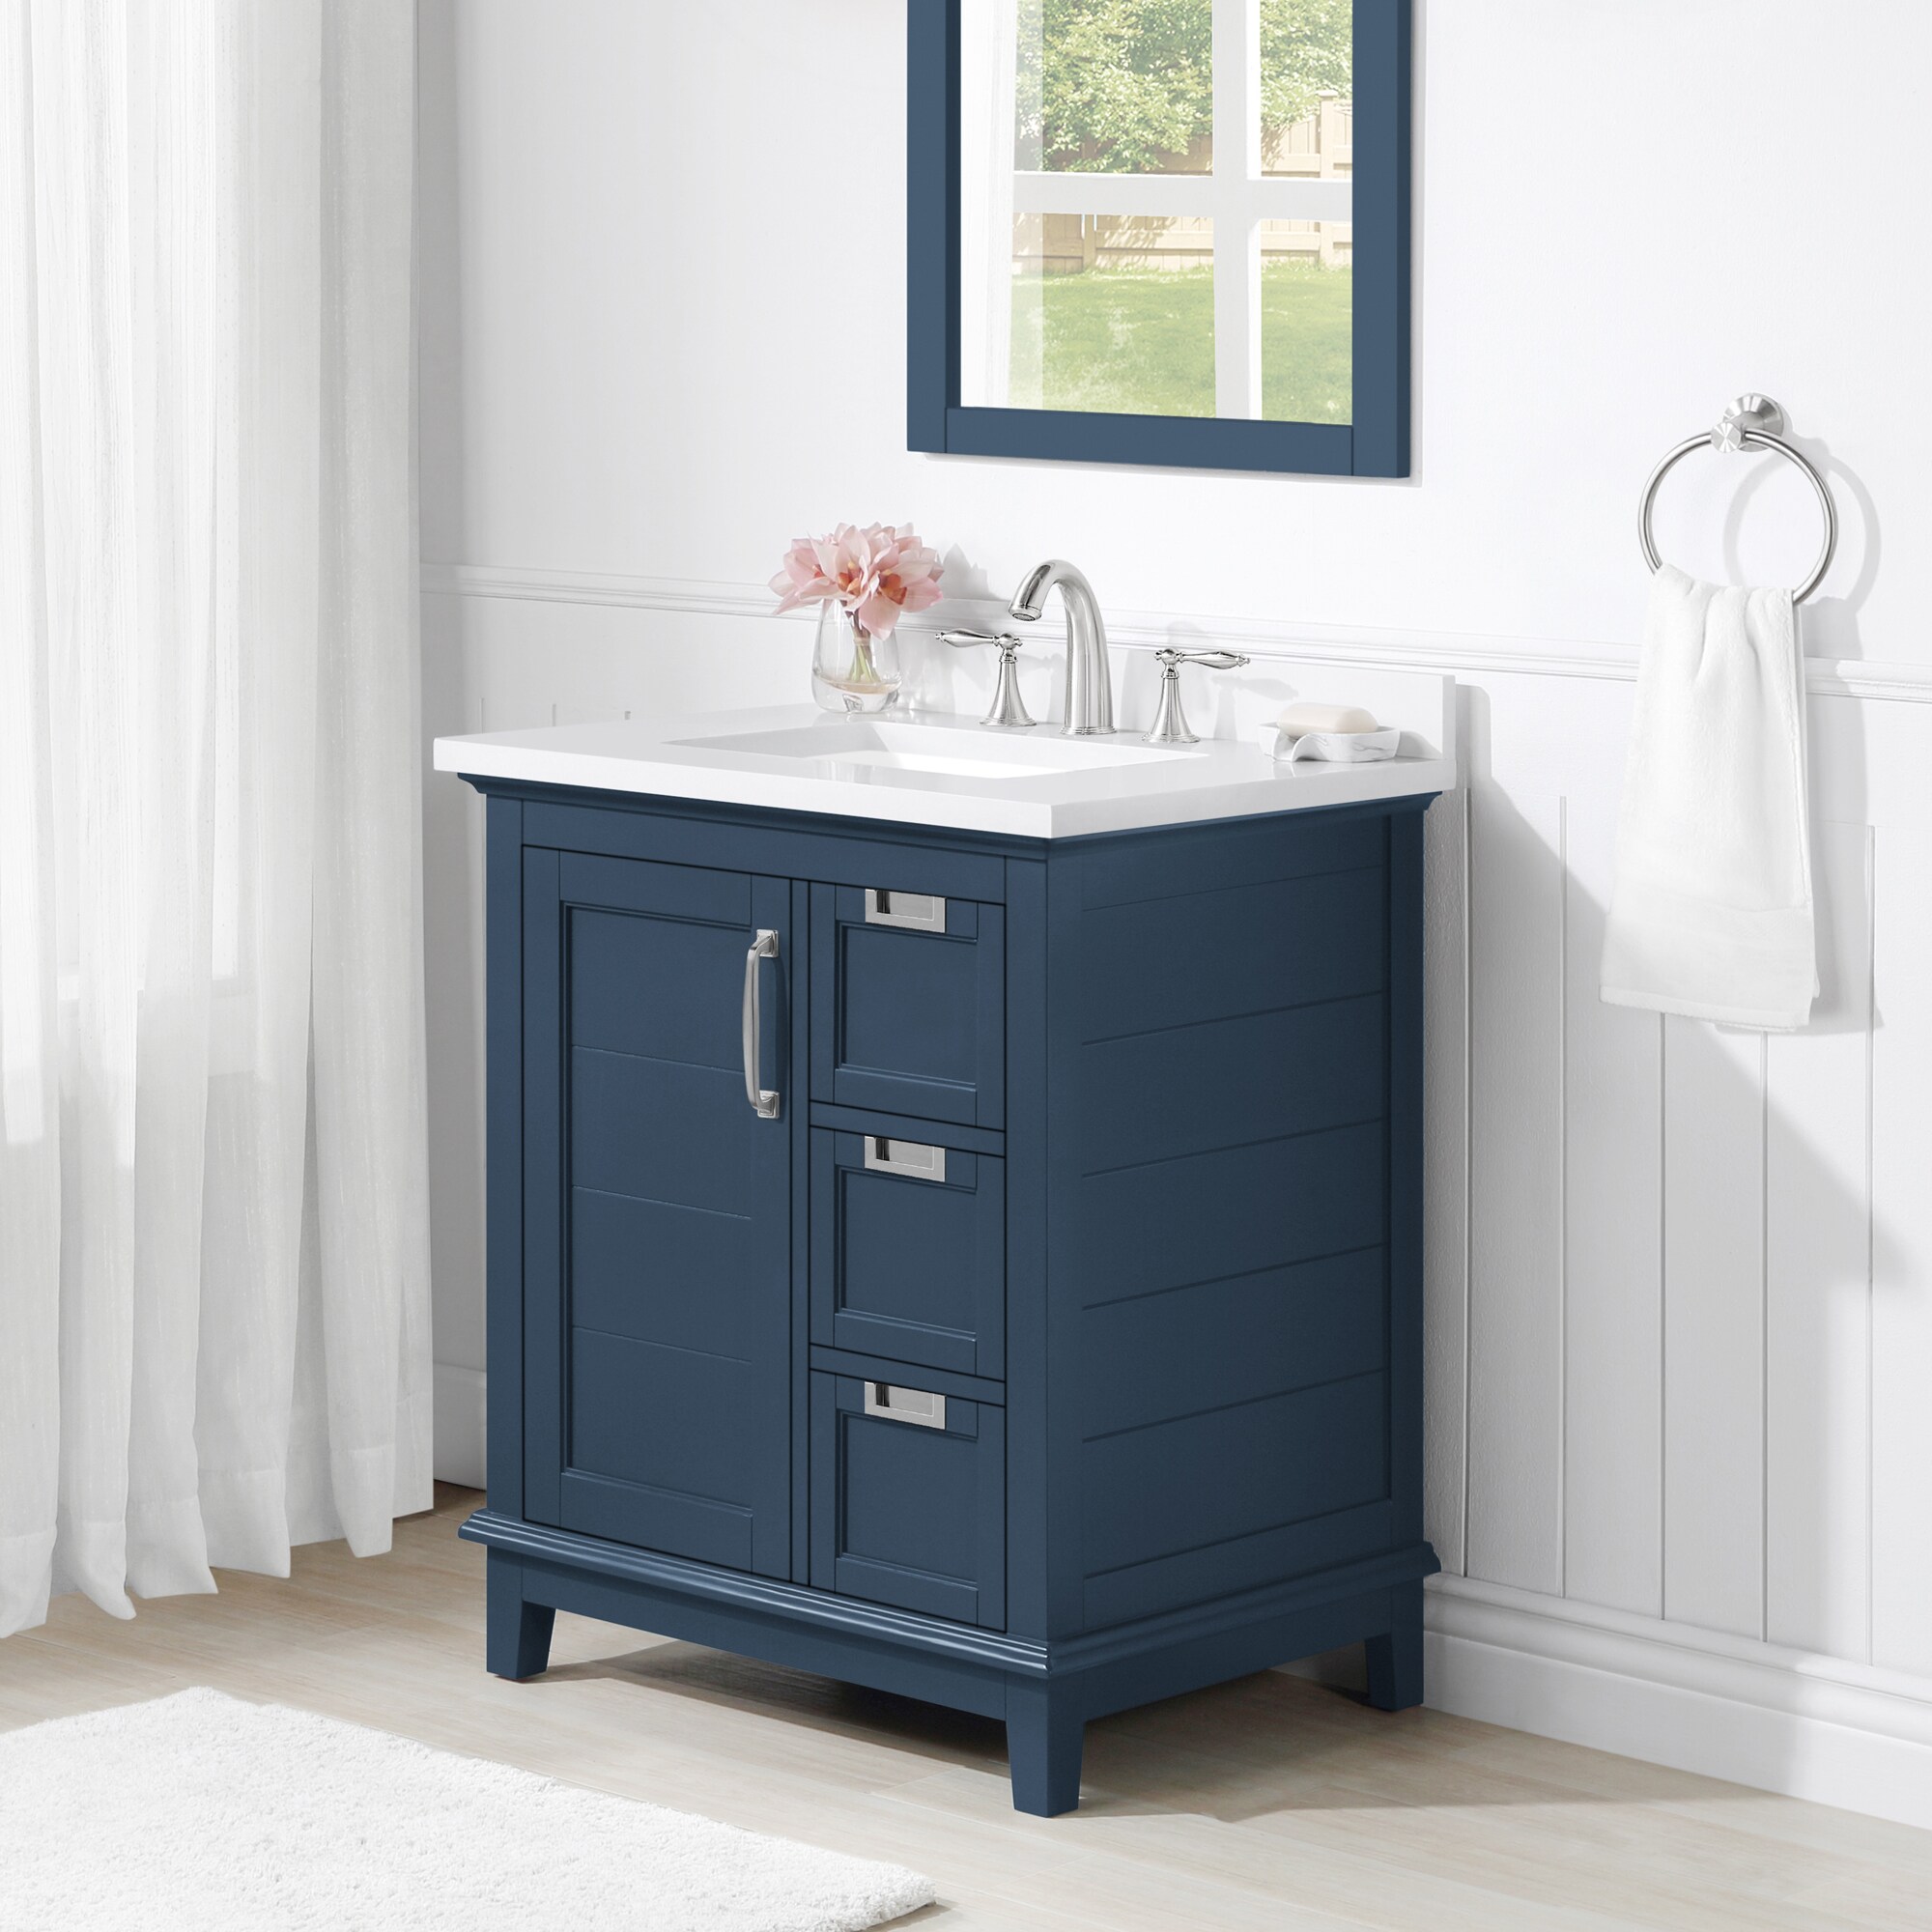 OVE Decors Pembroke 30-in Grayish Blue Undermount Single Sink Bathroom ...